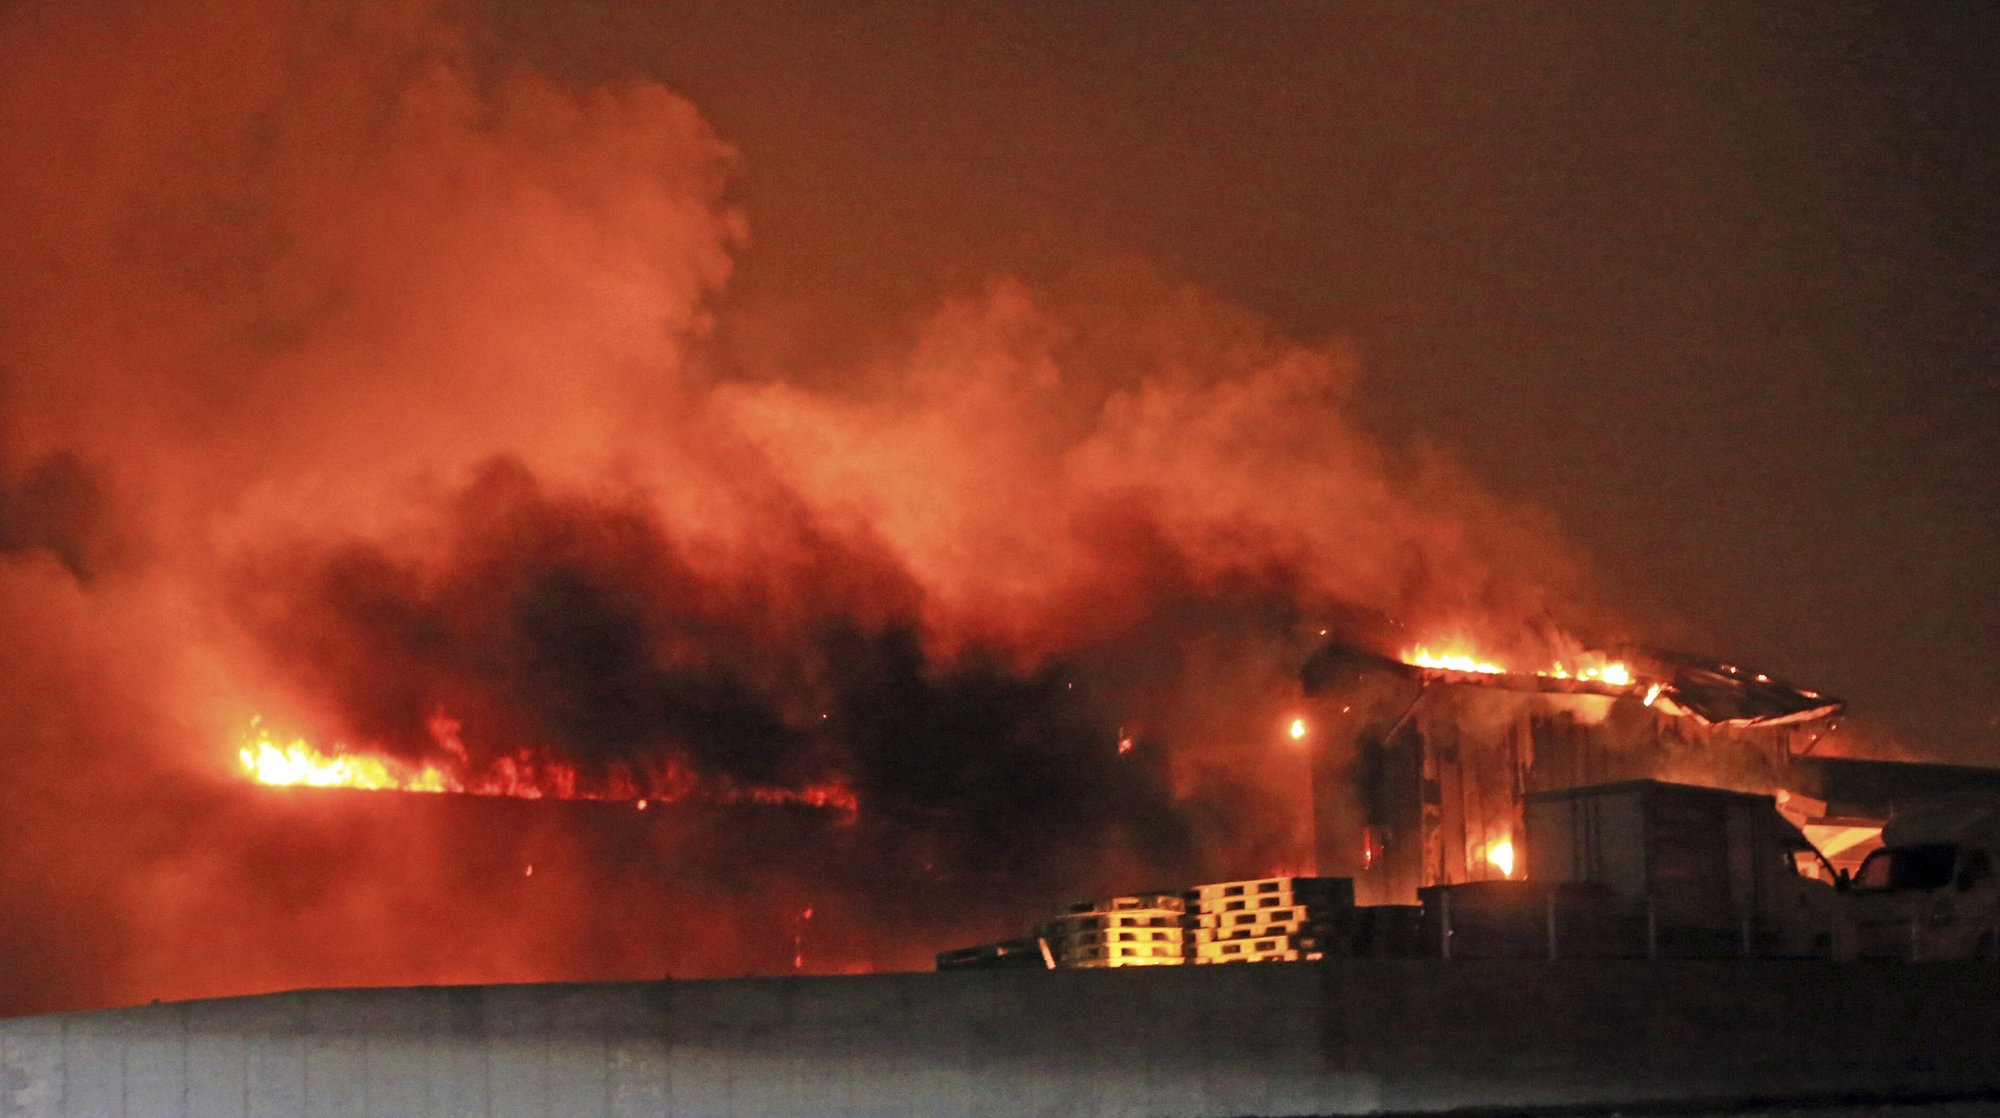 Firefighters extinguish large parts of South Korean blaze